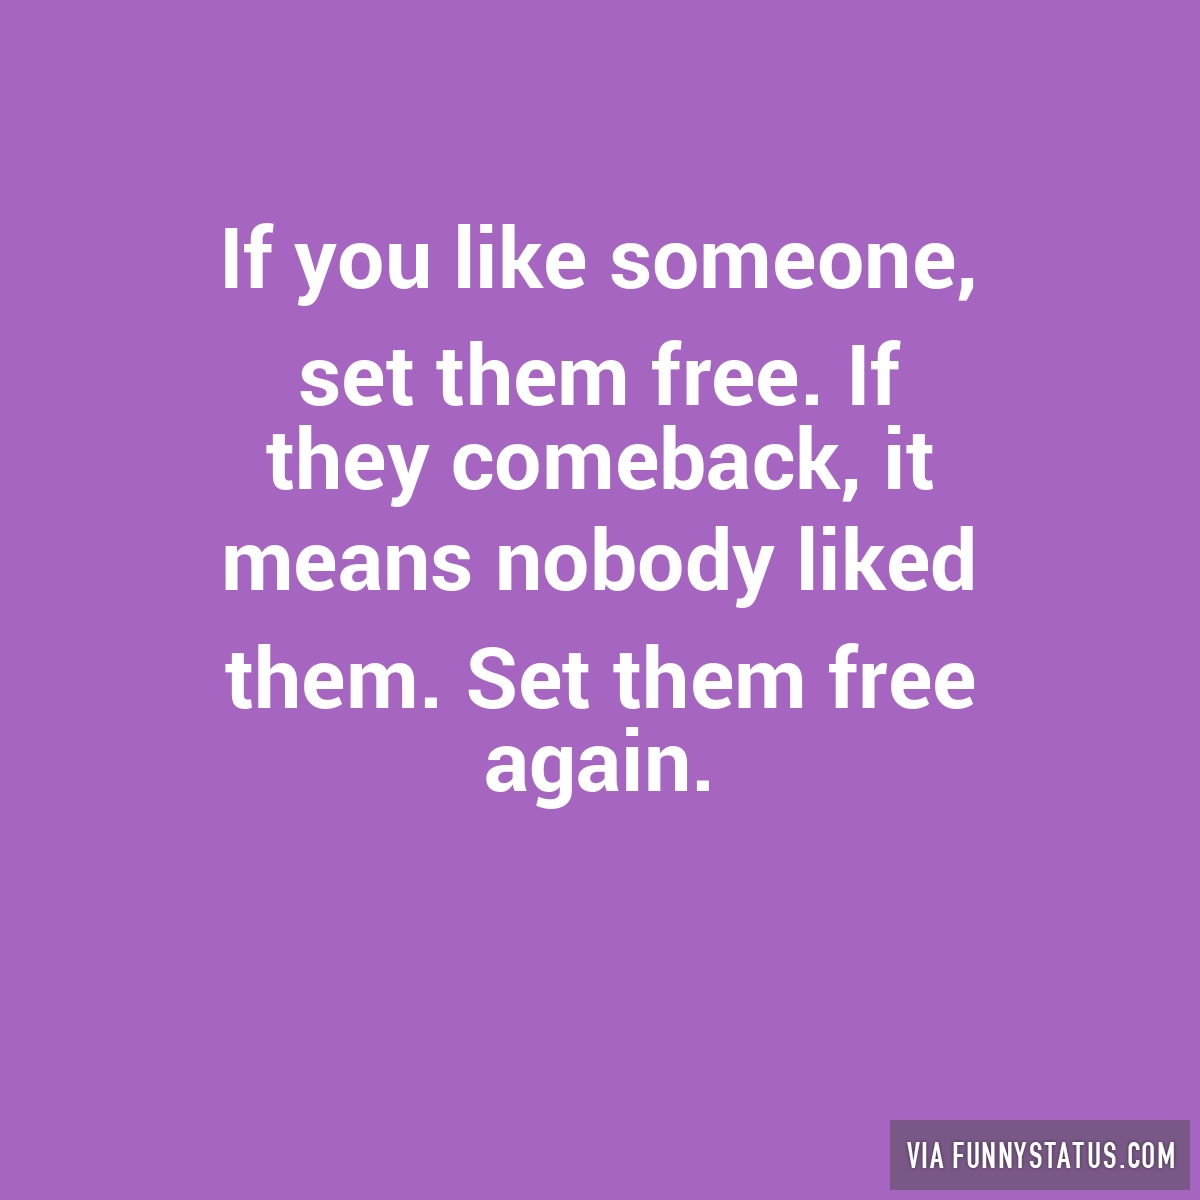 If you like someone set them free